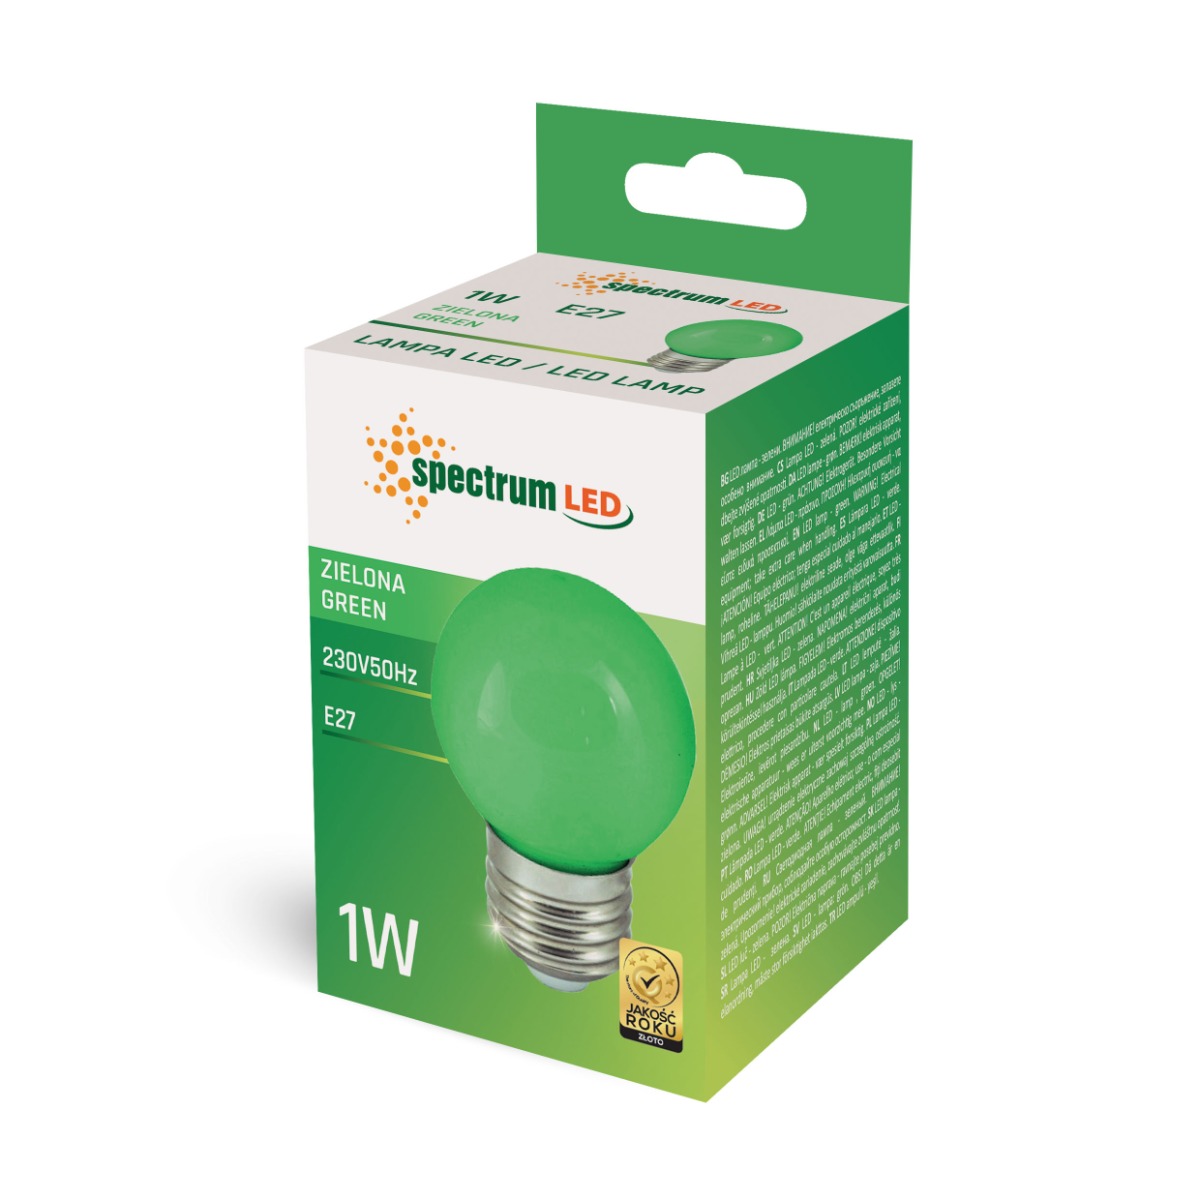 Green LED lamp with E27 fitting 1 Watt